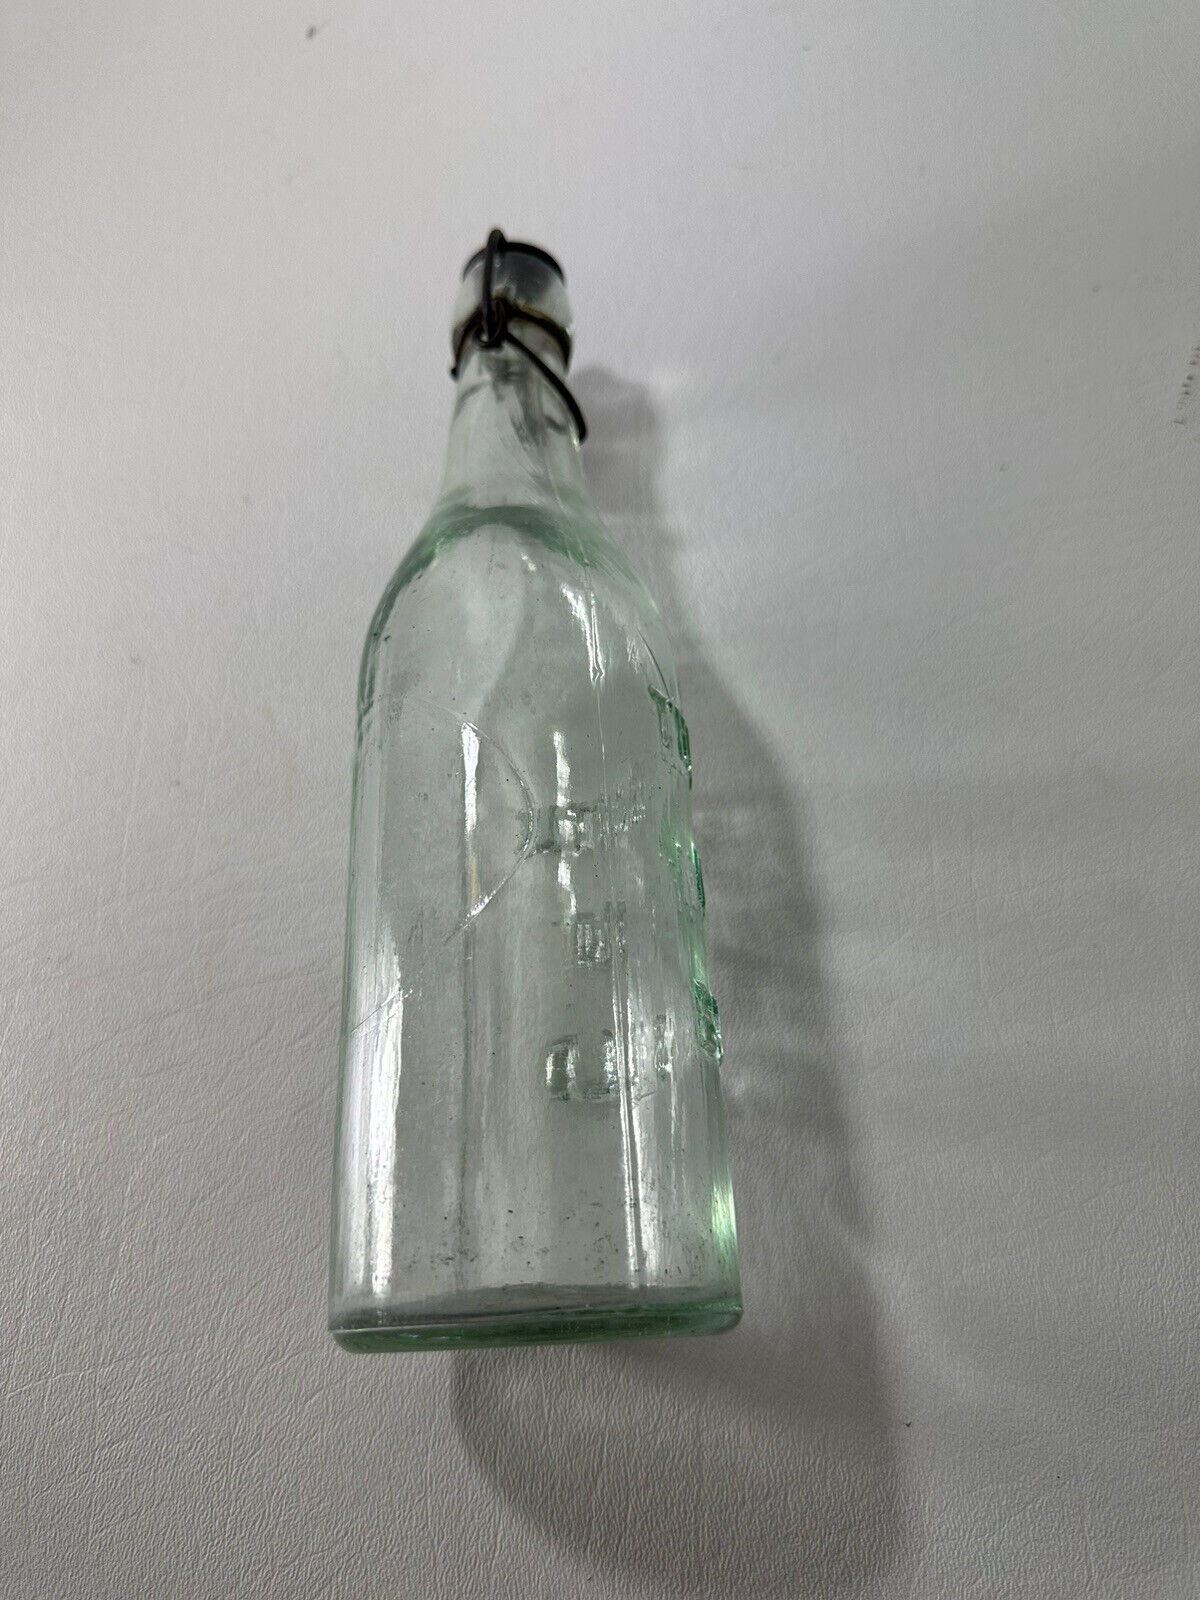 Antique Streator Bottle & Glass Company Cincinnati Ohio Glass Bottle SB & G Co